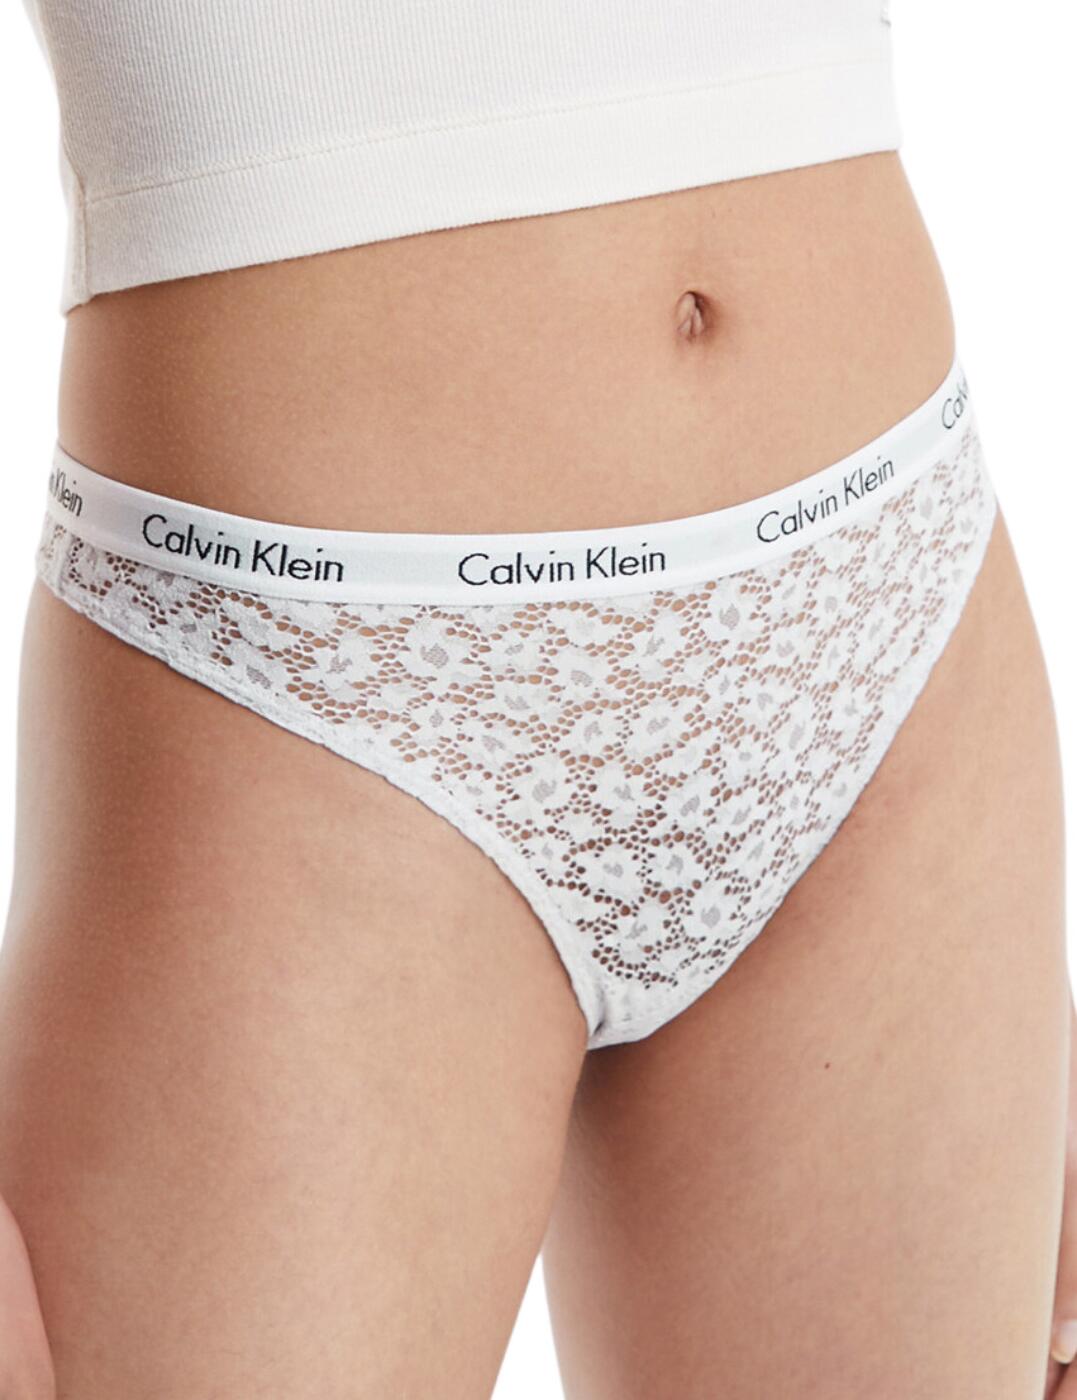 CALVIN KLEIN Cotton Essentials Pink White Bikini Panty NEW Womens